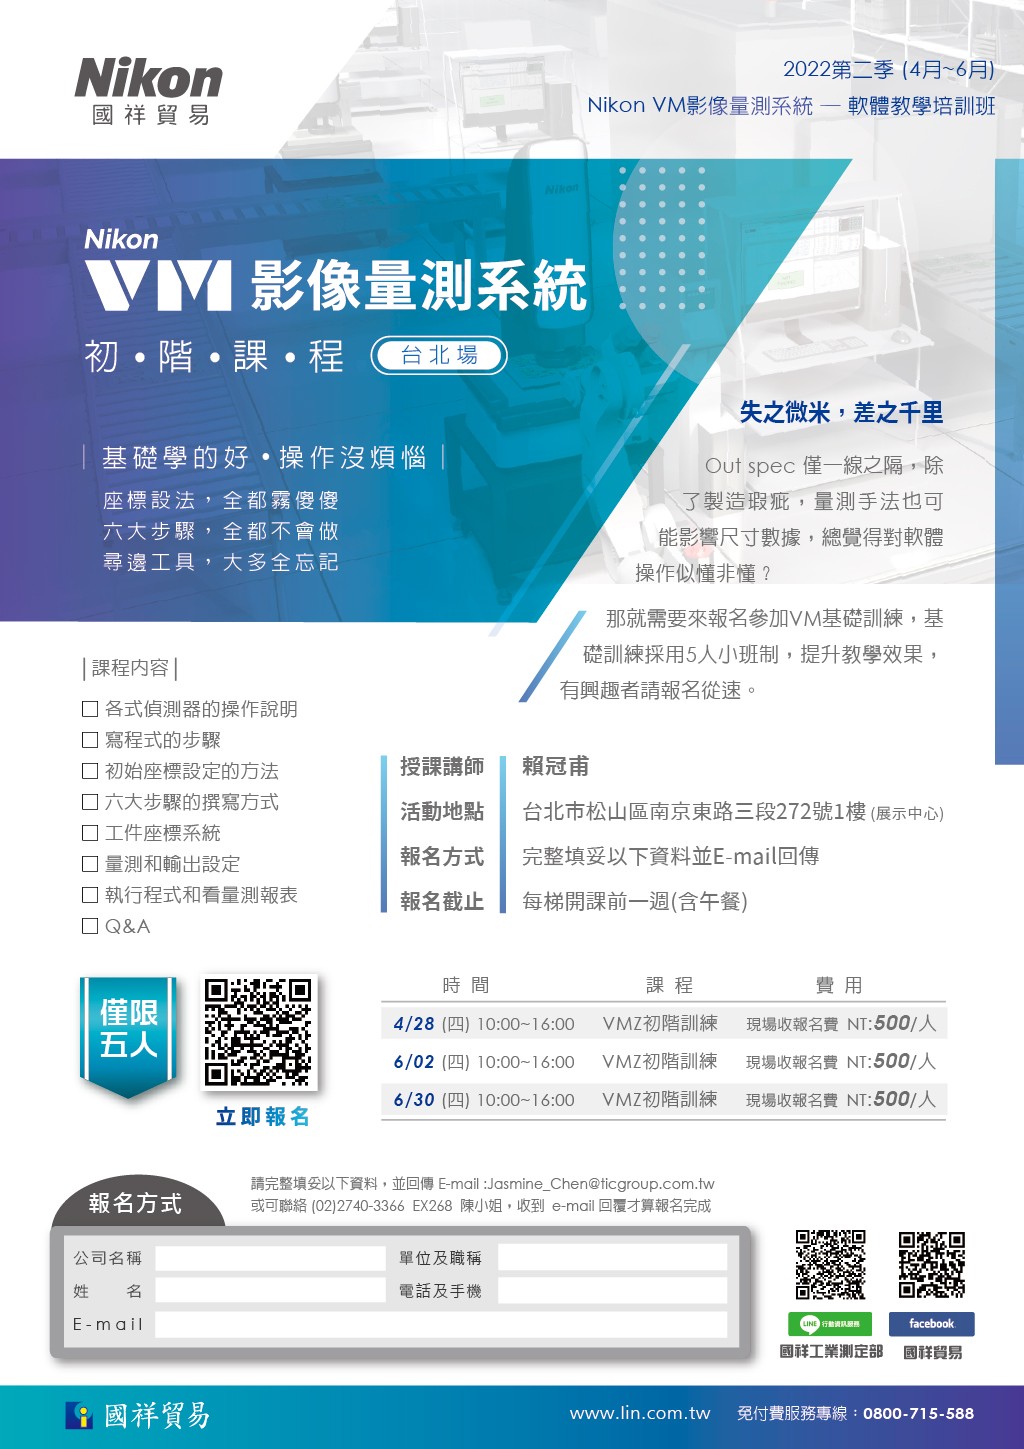 202204-06_VM影像量測系統軟體課程_台北 (1).jpg - Nikon VM 影像量測系統初階課程 - 台北場